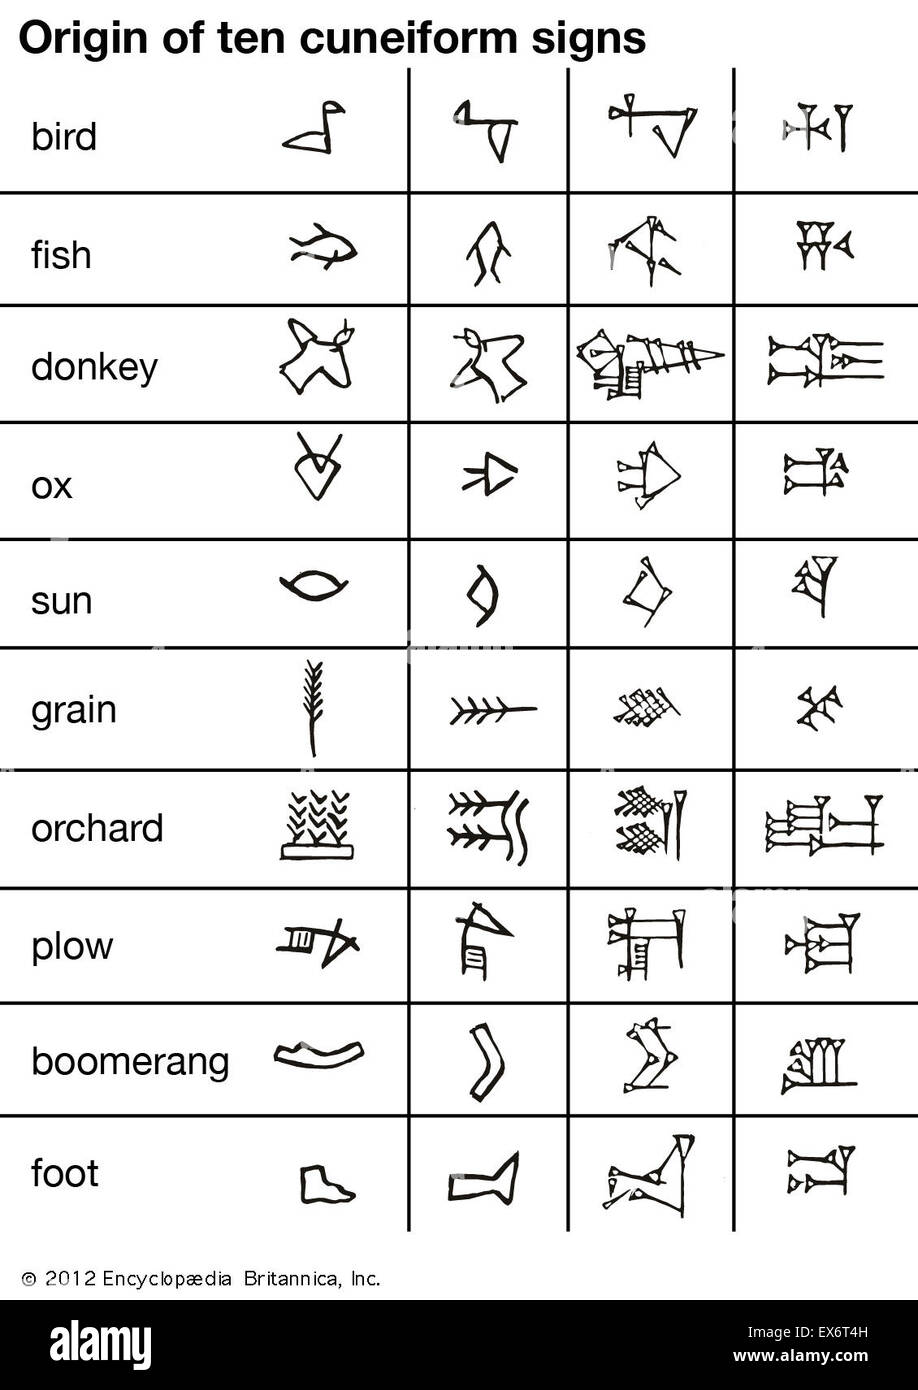 Origine dei dieci segni cuneiformi Foto Stock